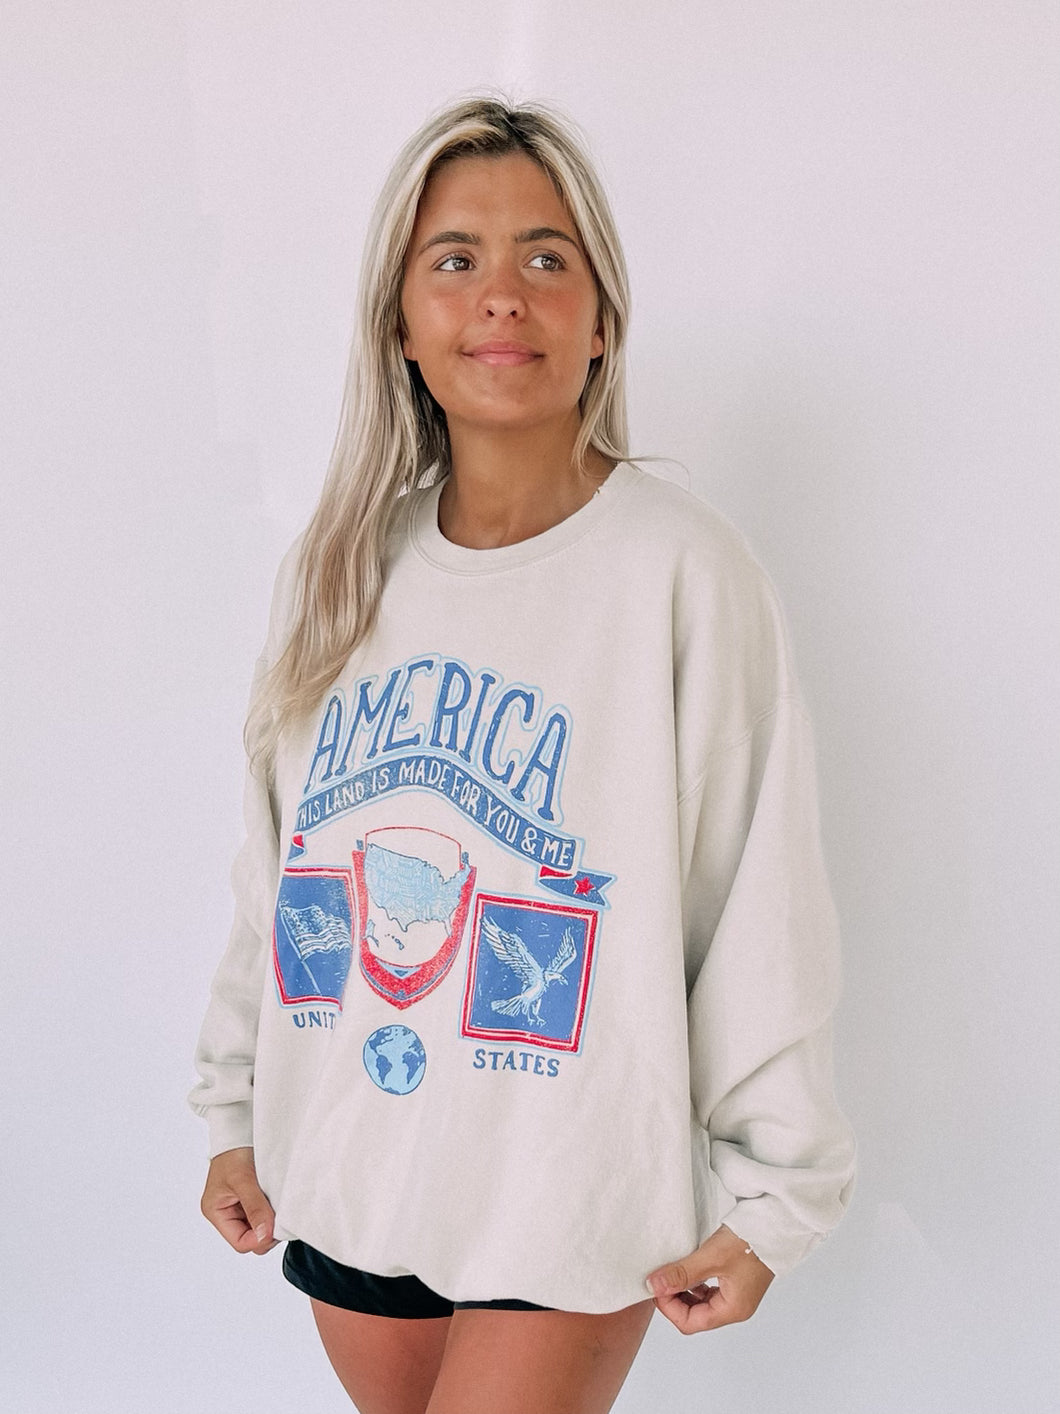 America Patch Sweatshirt